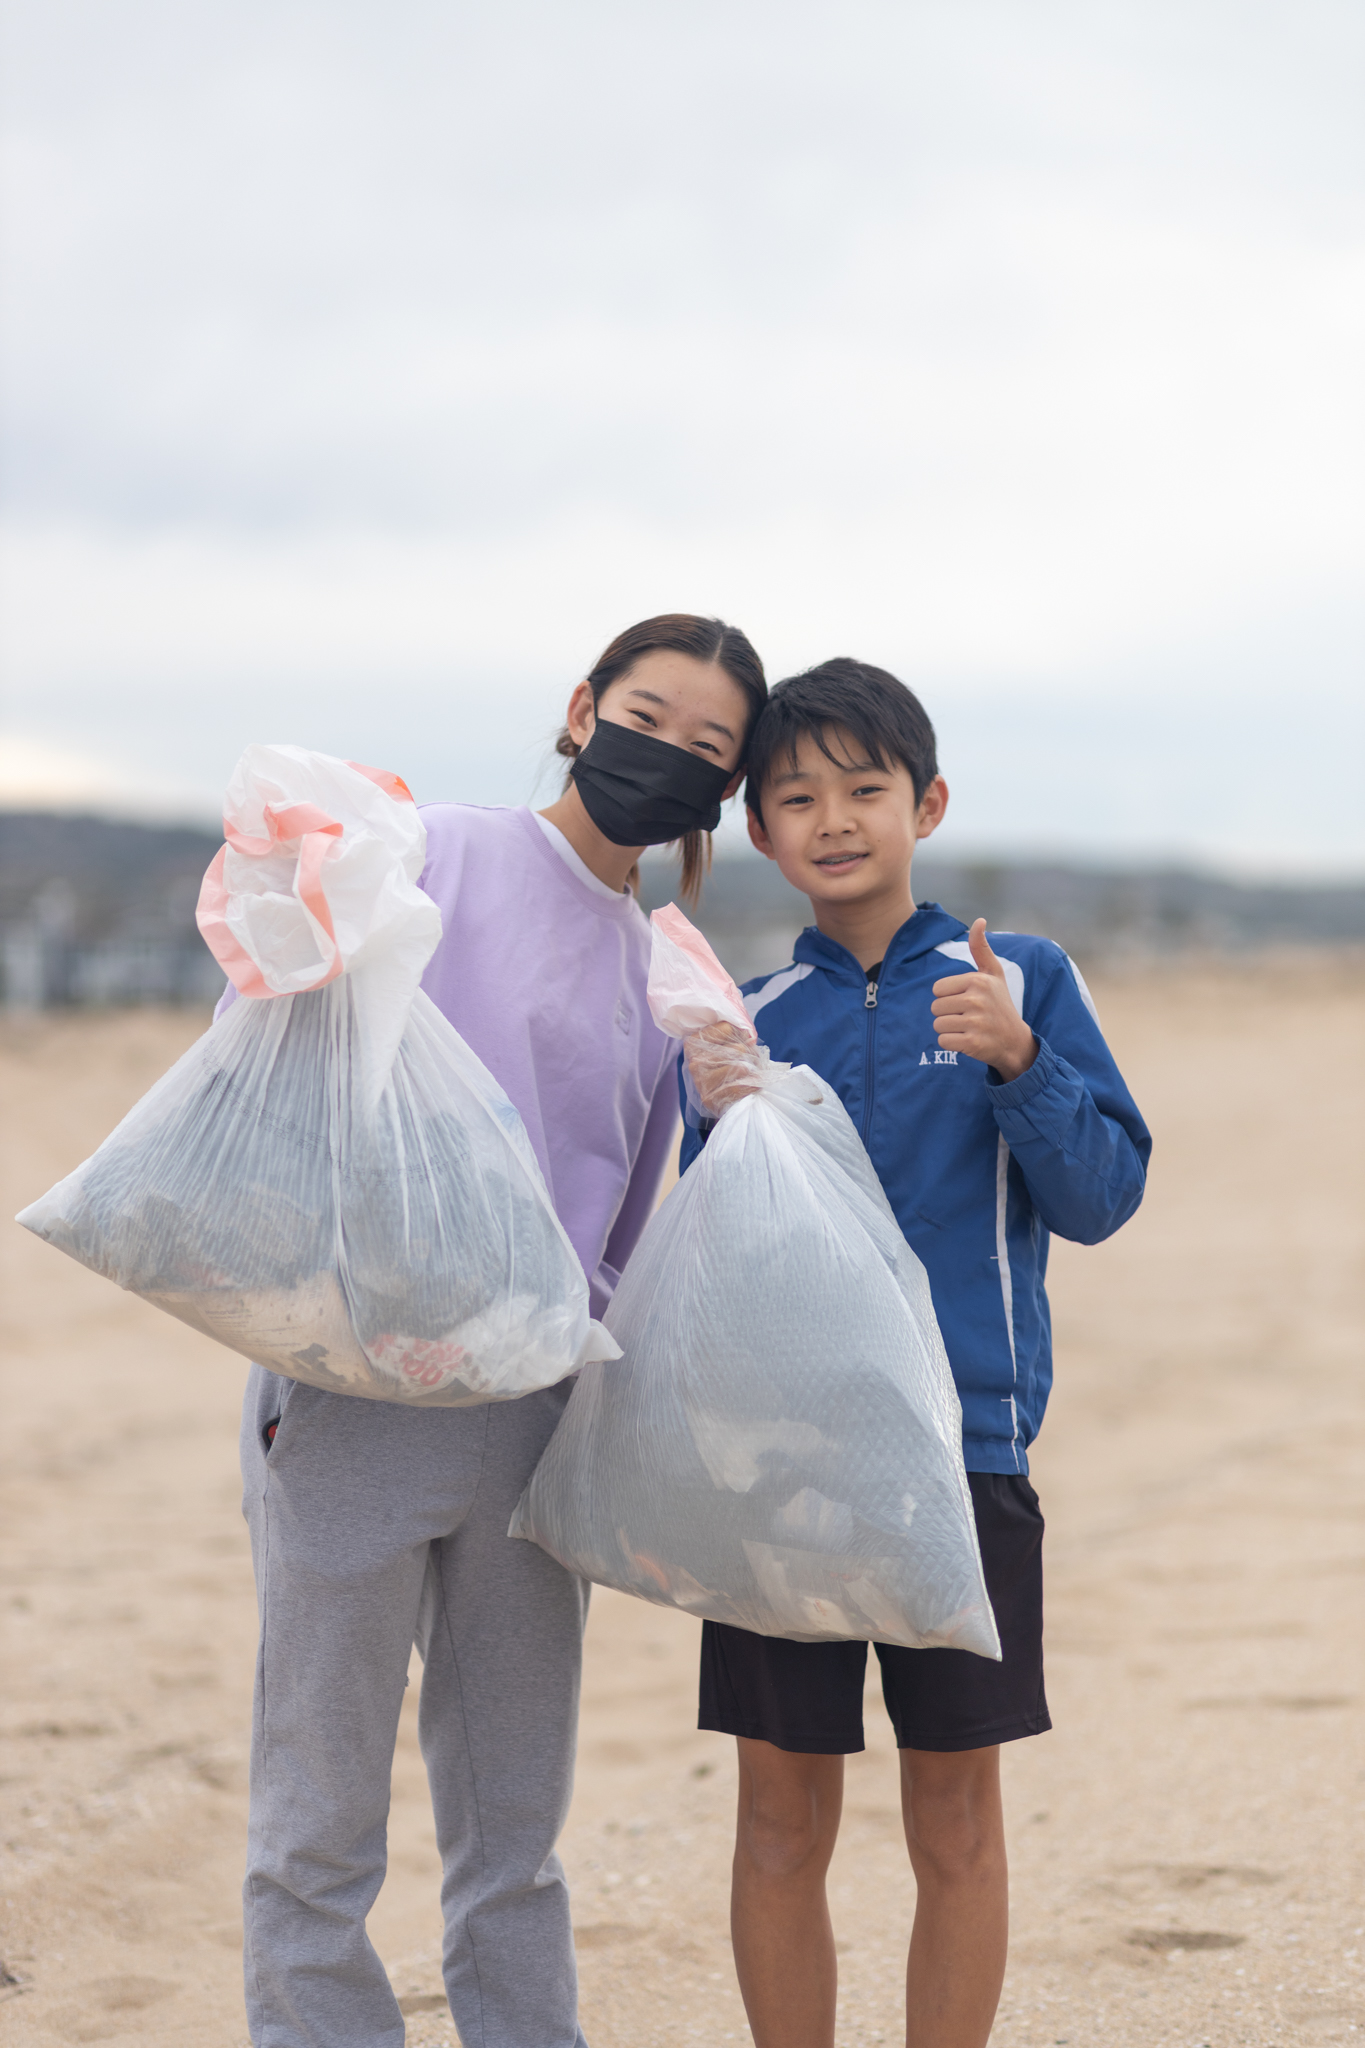 Kids cleaning up the beach near Balboa Pier